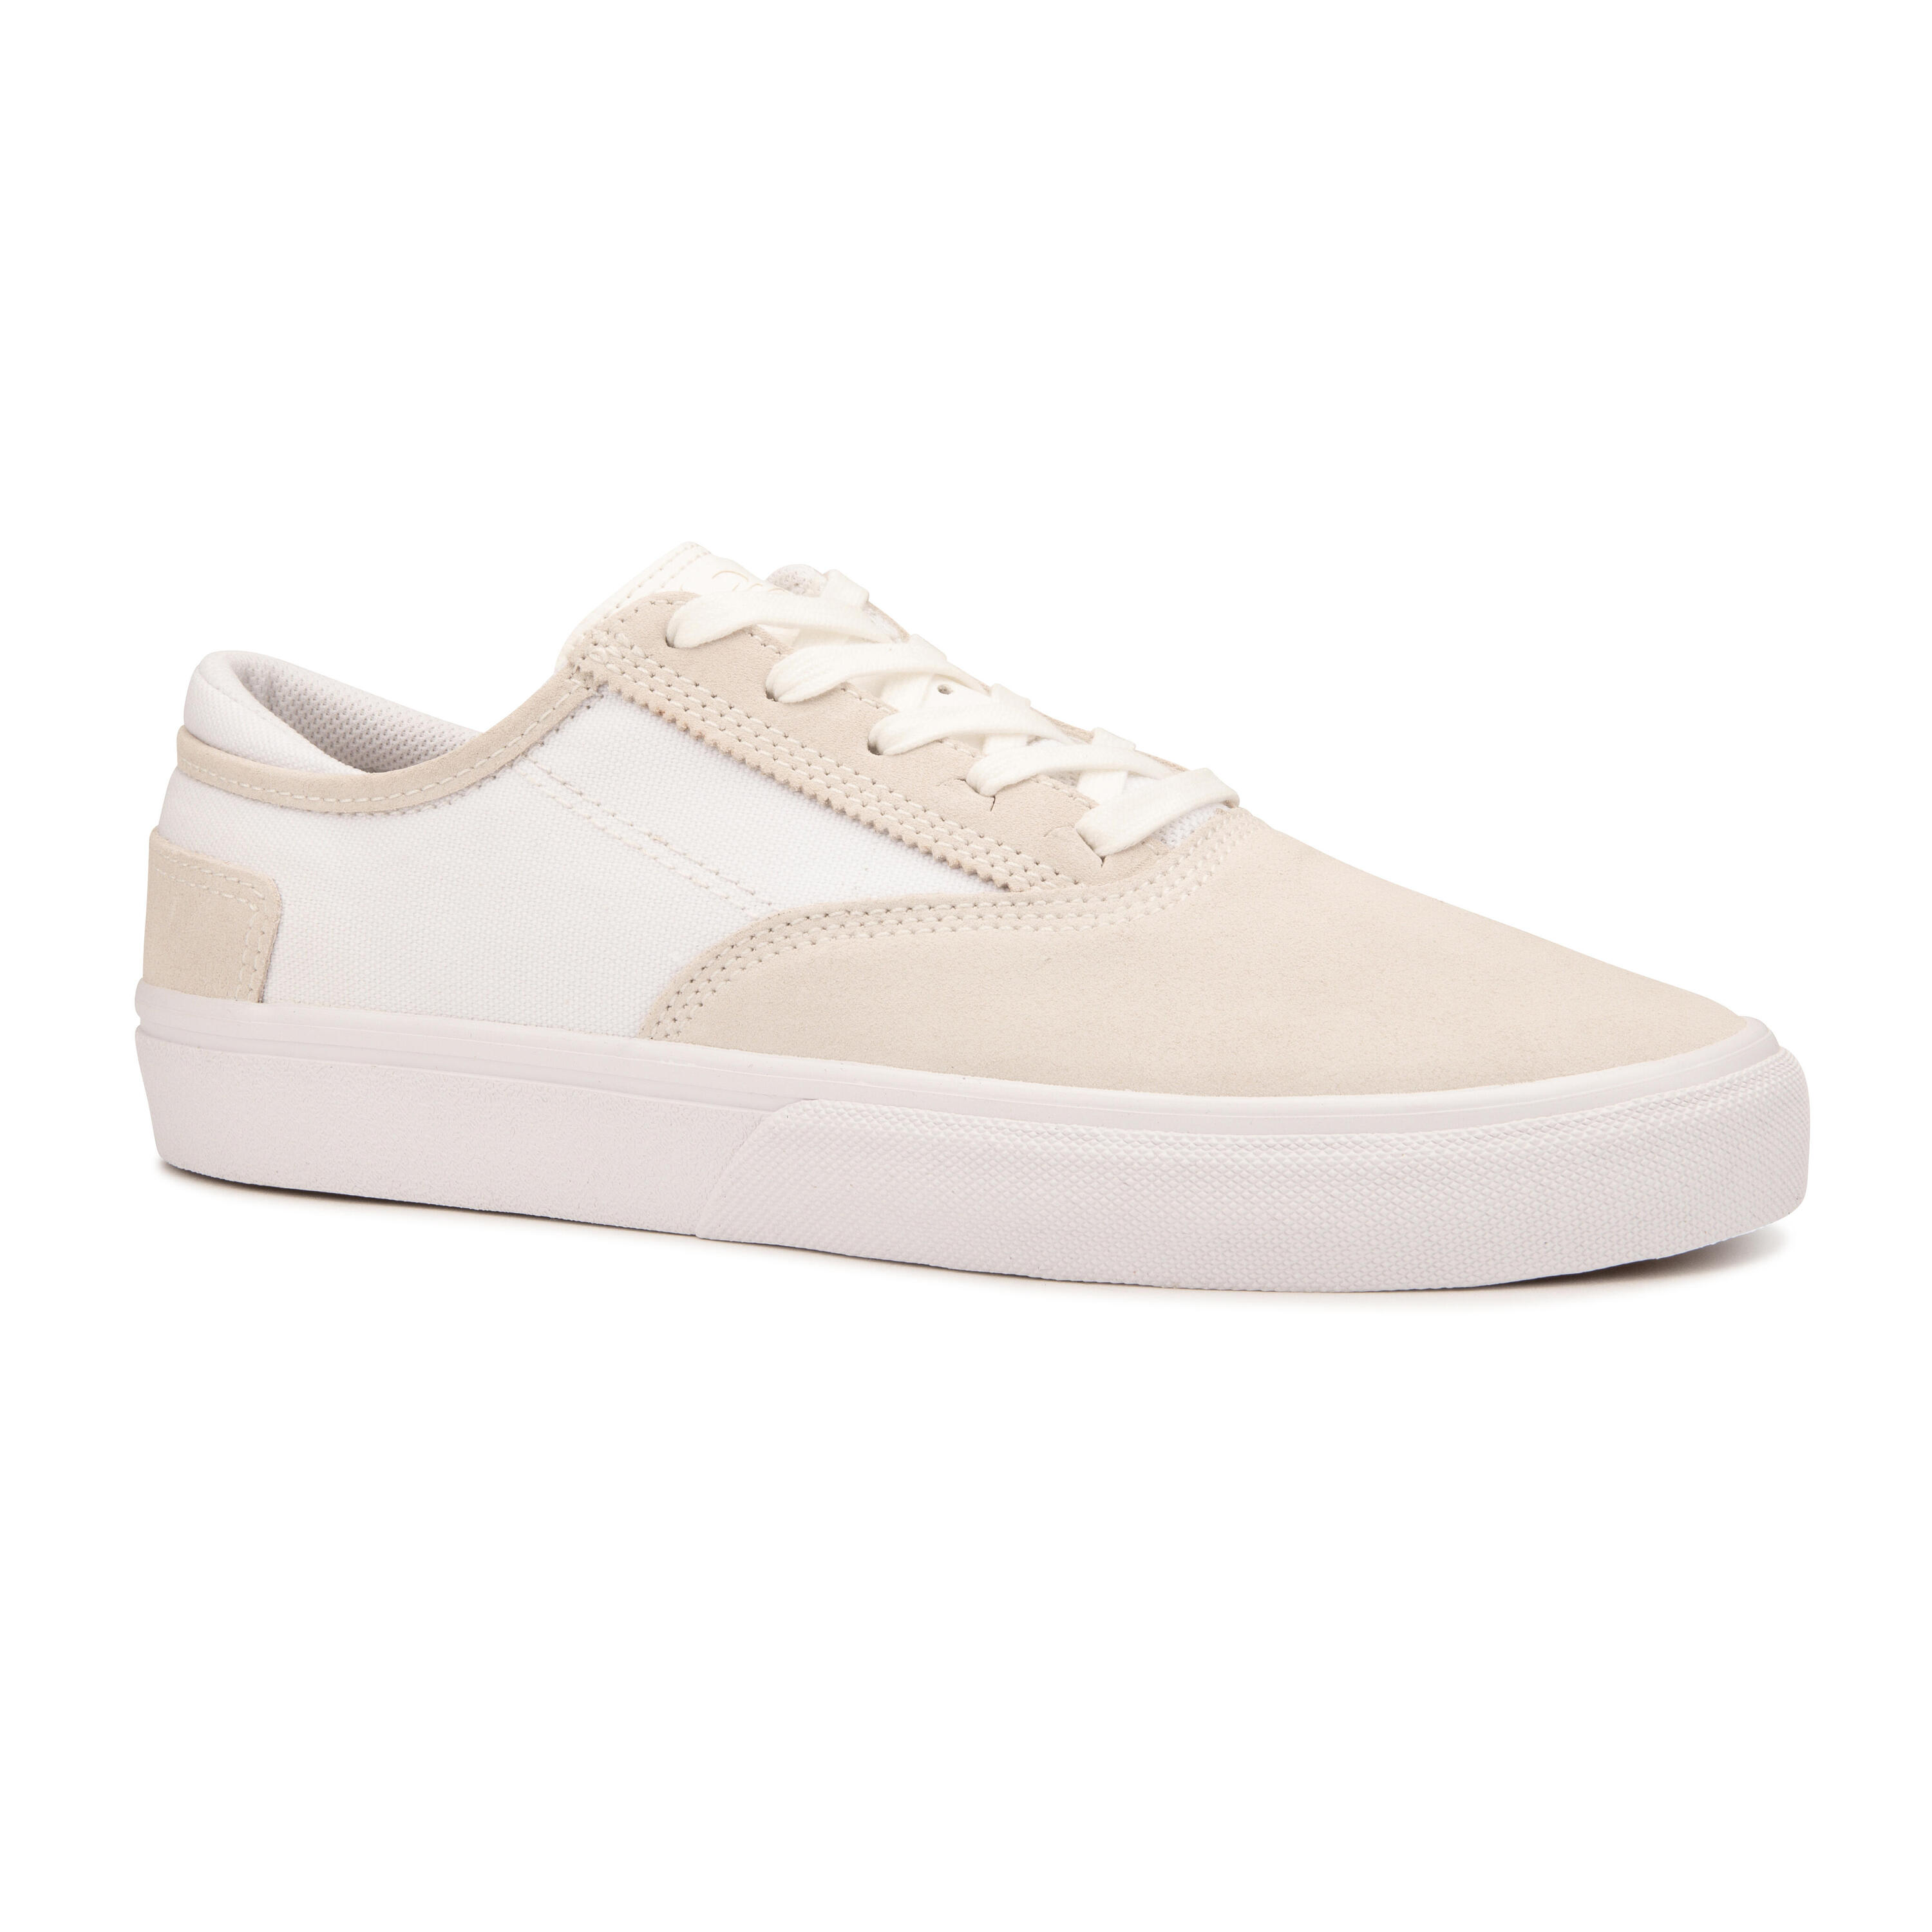 Adult Vulcanised Skate Shoes Vulca 500 II - White/White 1/17